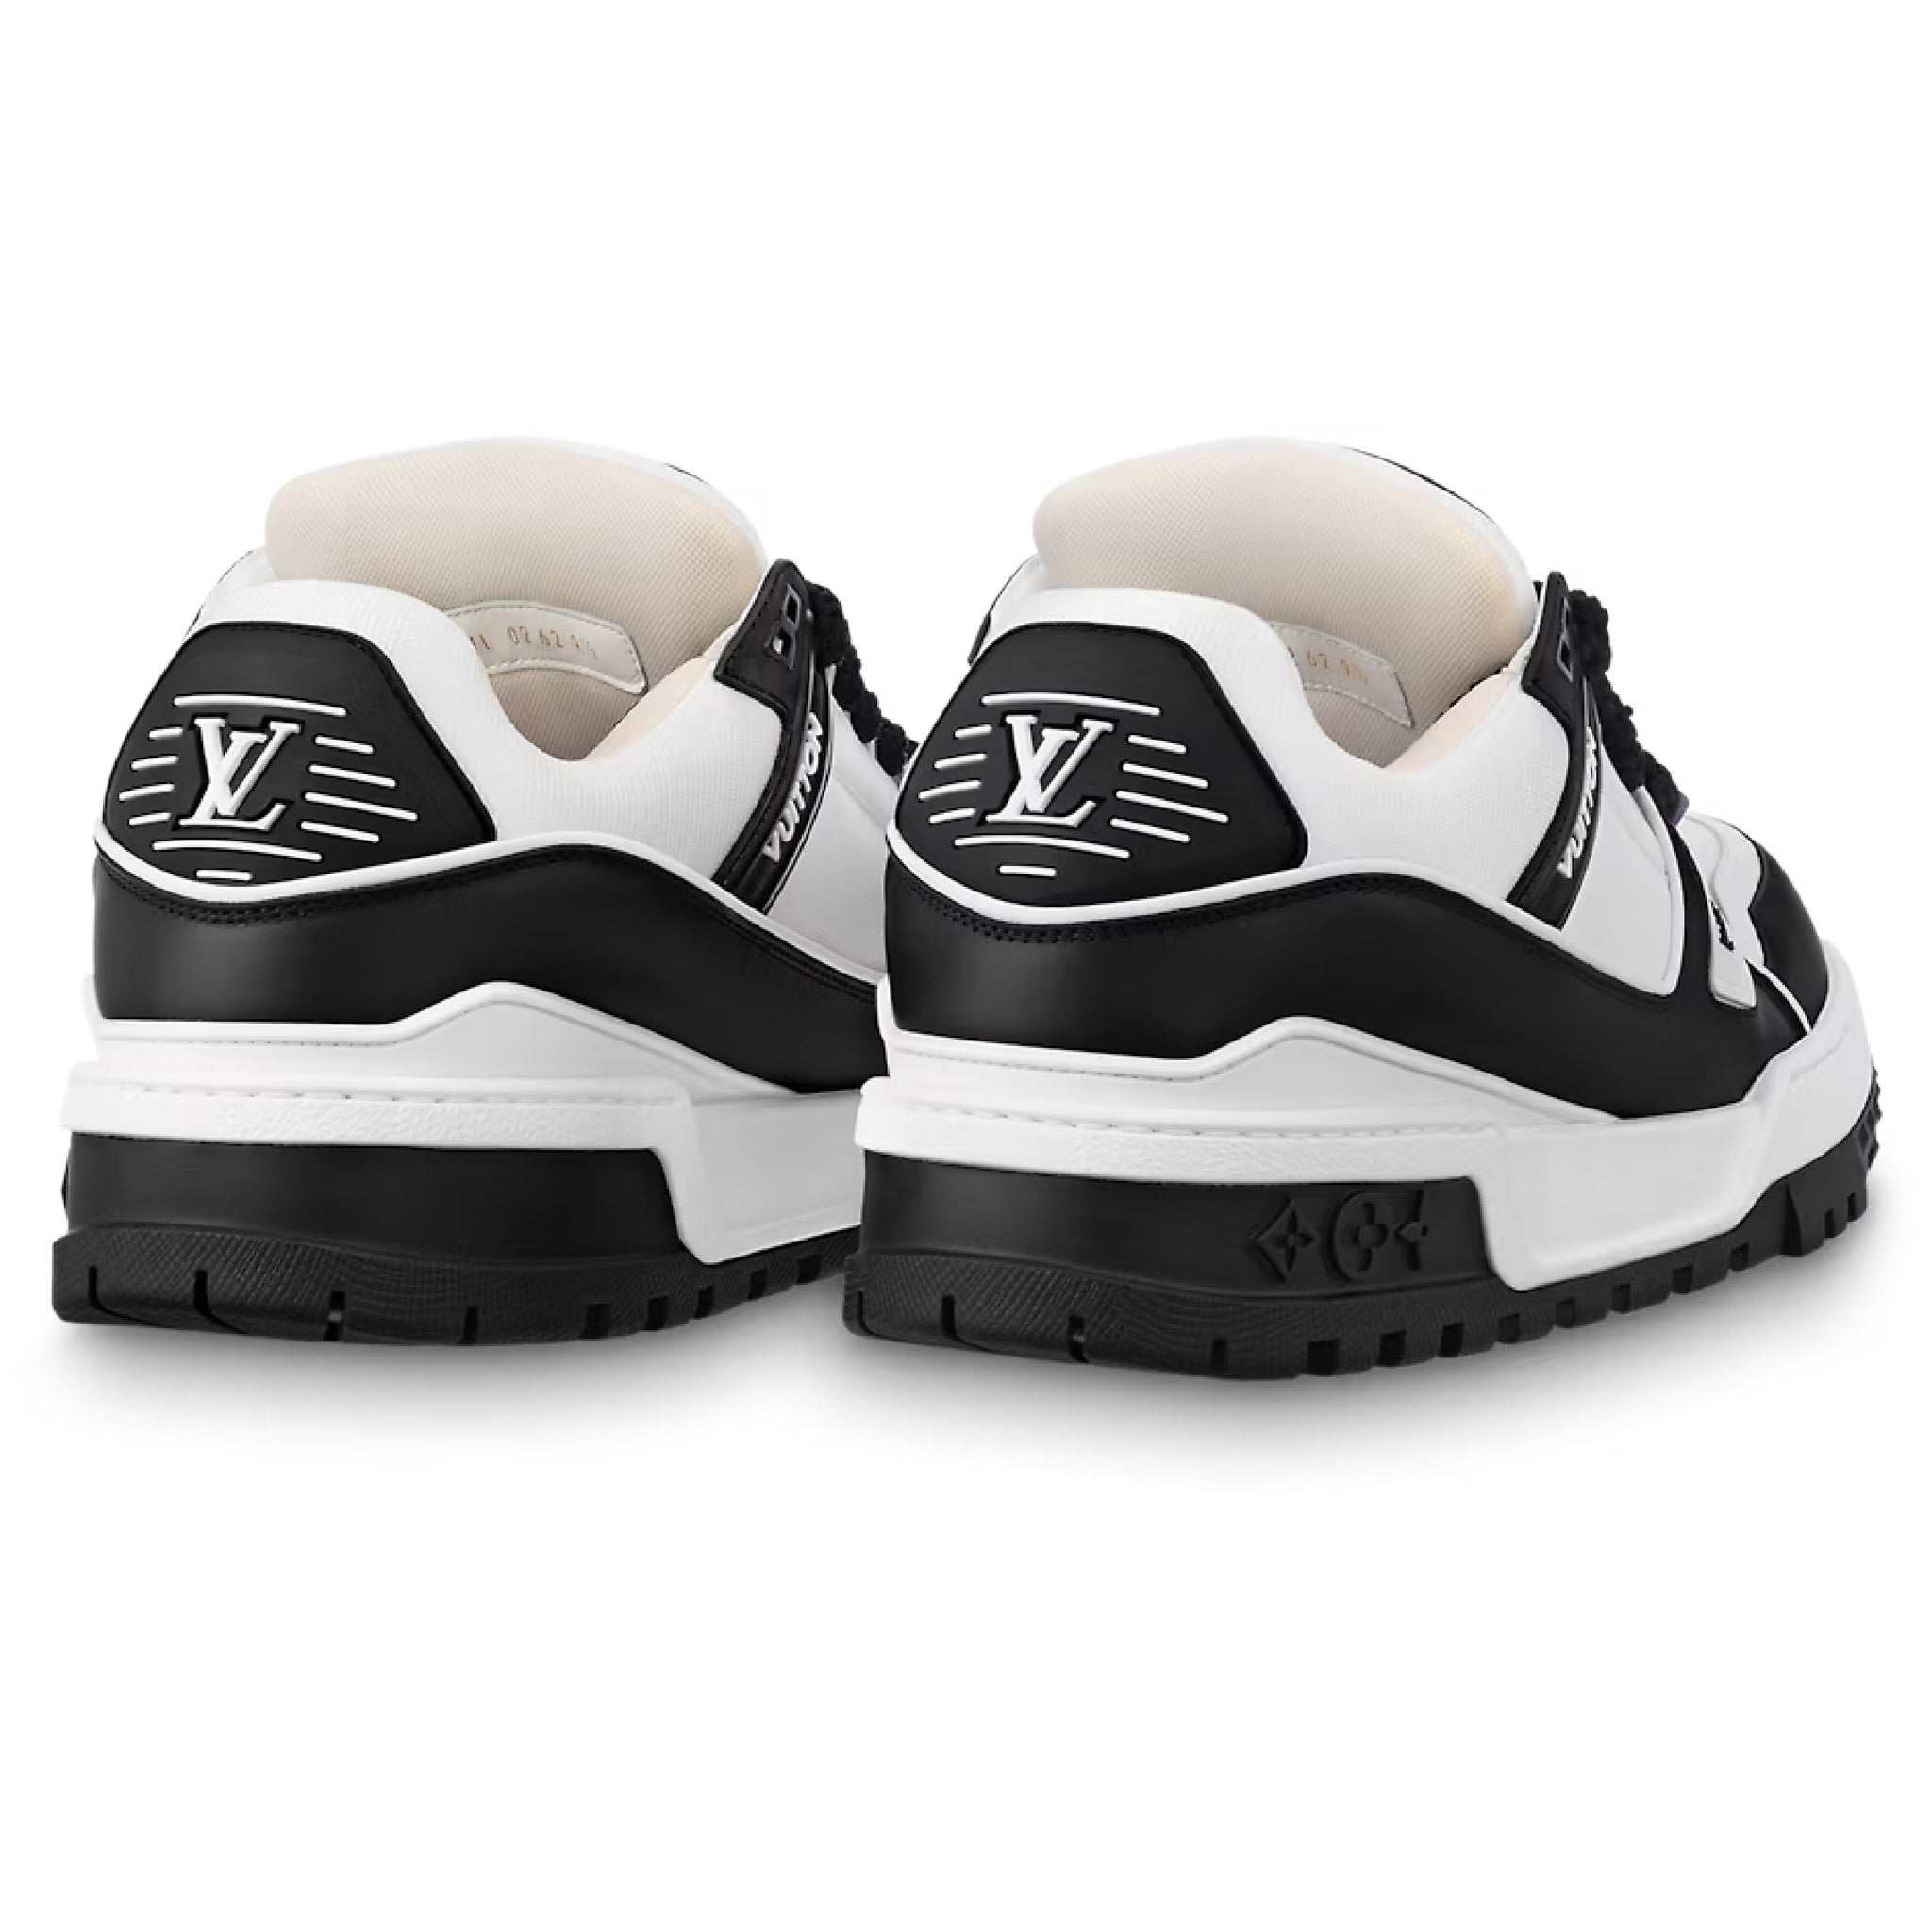 Back view of Louis Vuitton LV Maxi Trainer Black Sneaker 1ABZQ6